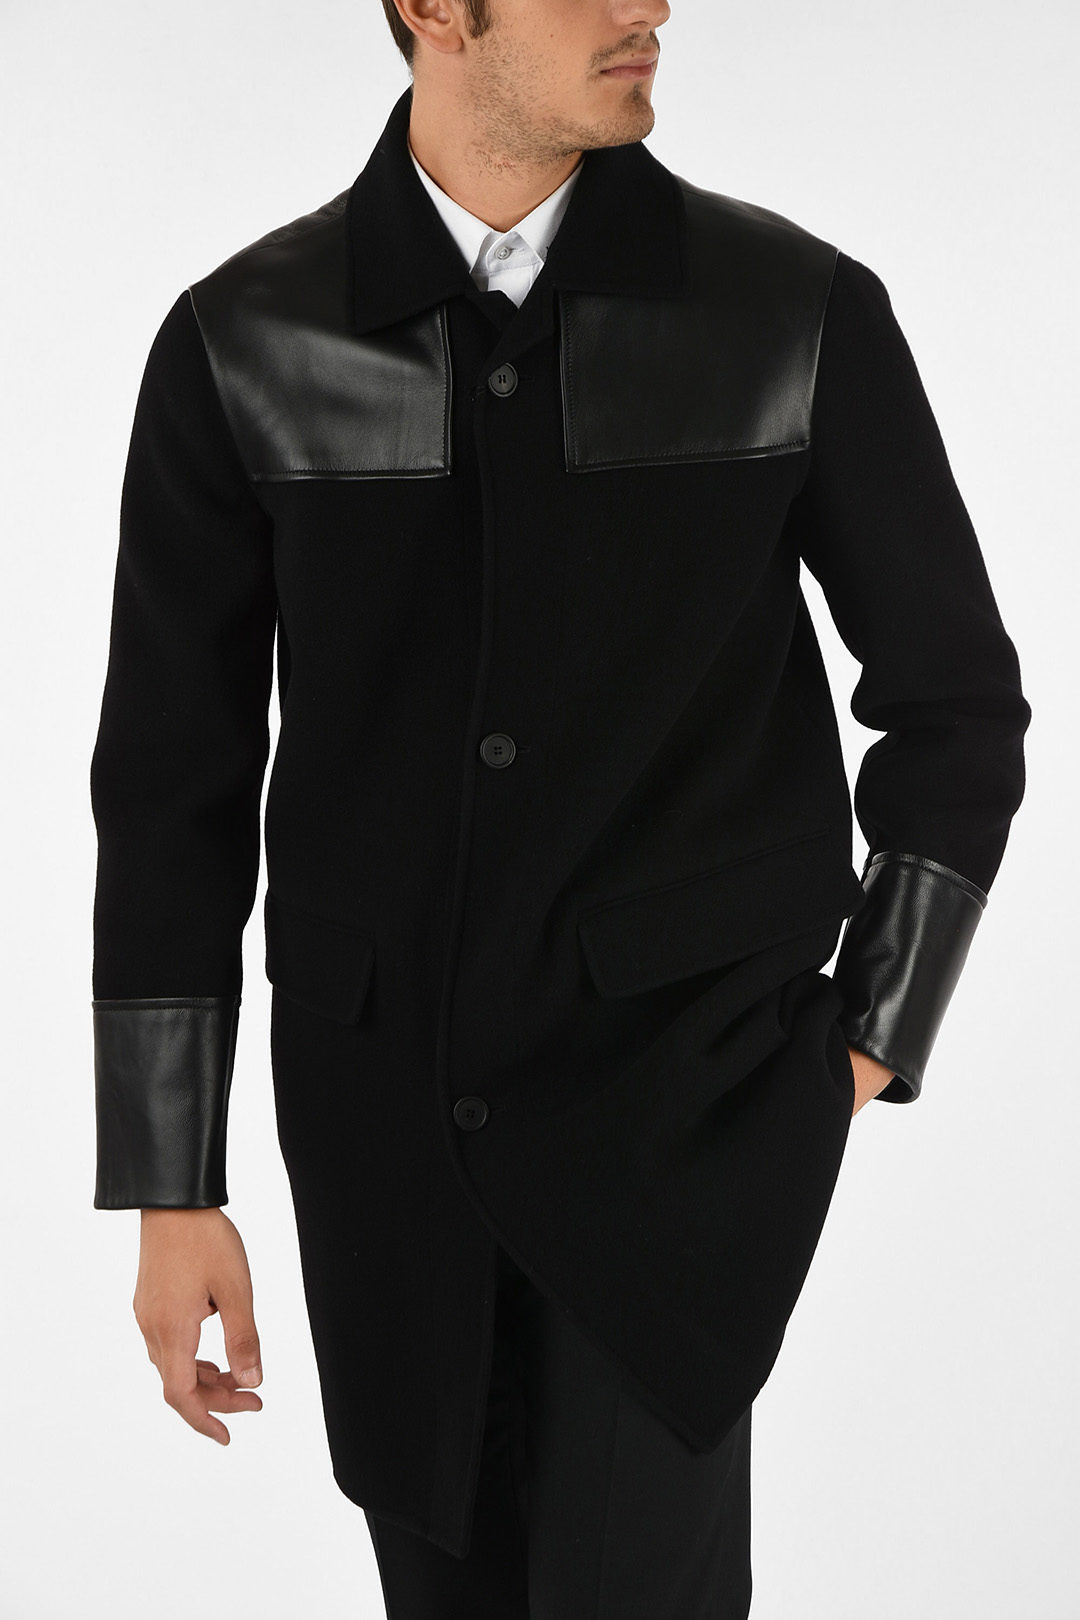 Bottega Veneta leather applications balmacaan coat men - Glamood Outlet